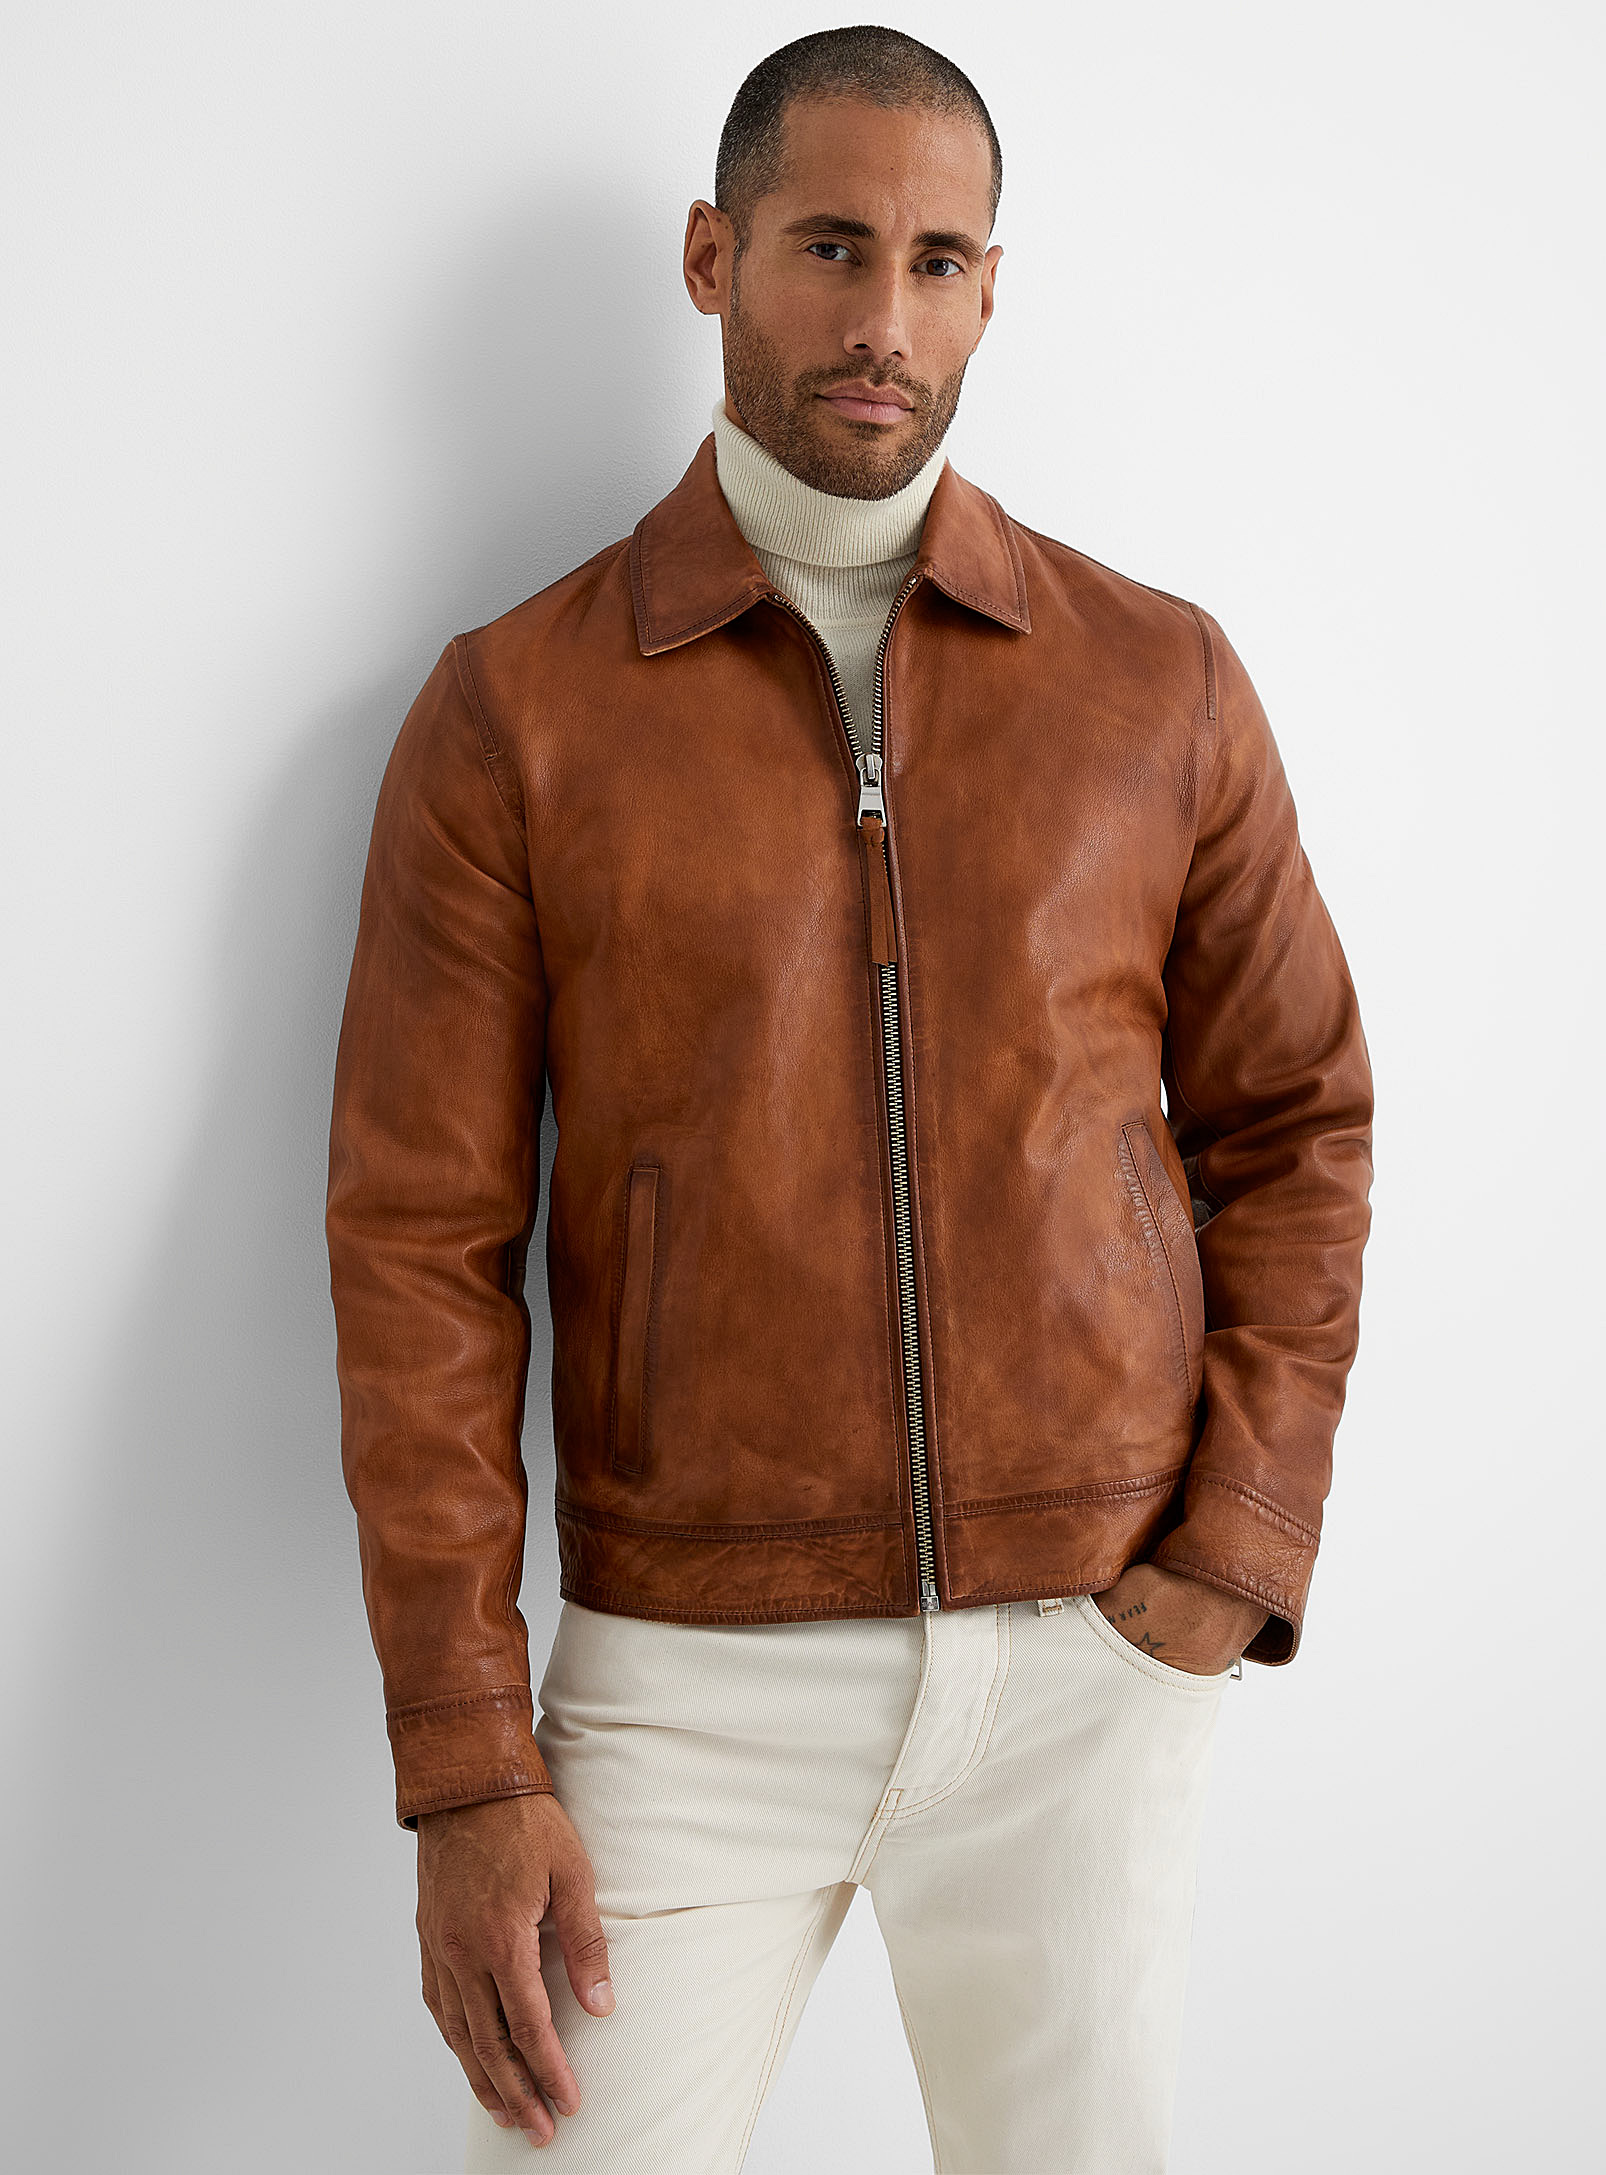 Sly & Co - Men's James Dean leather jacket